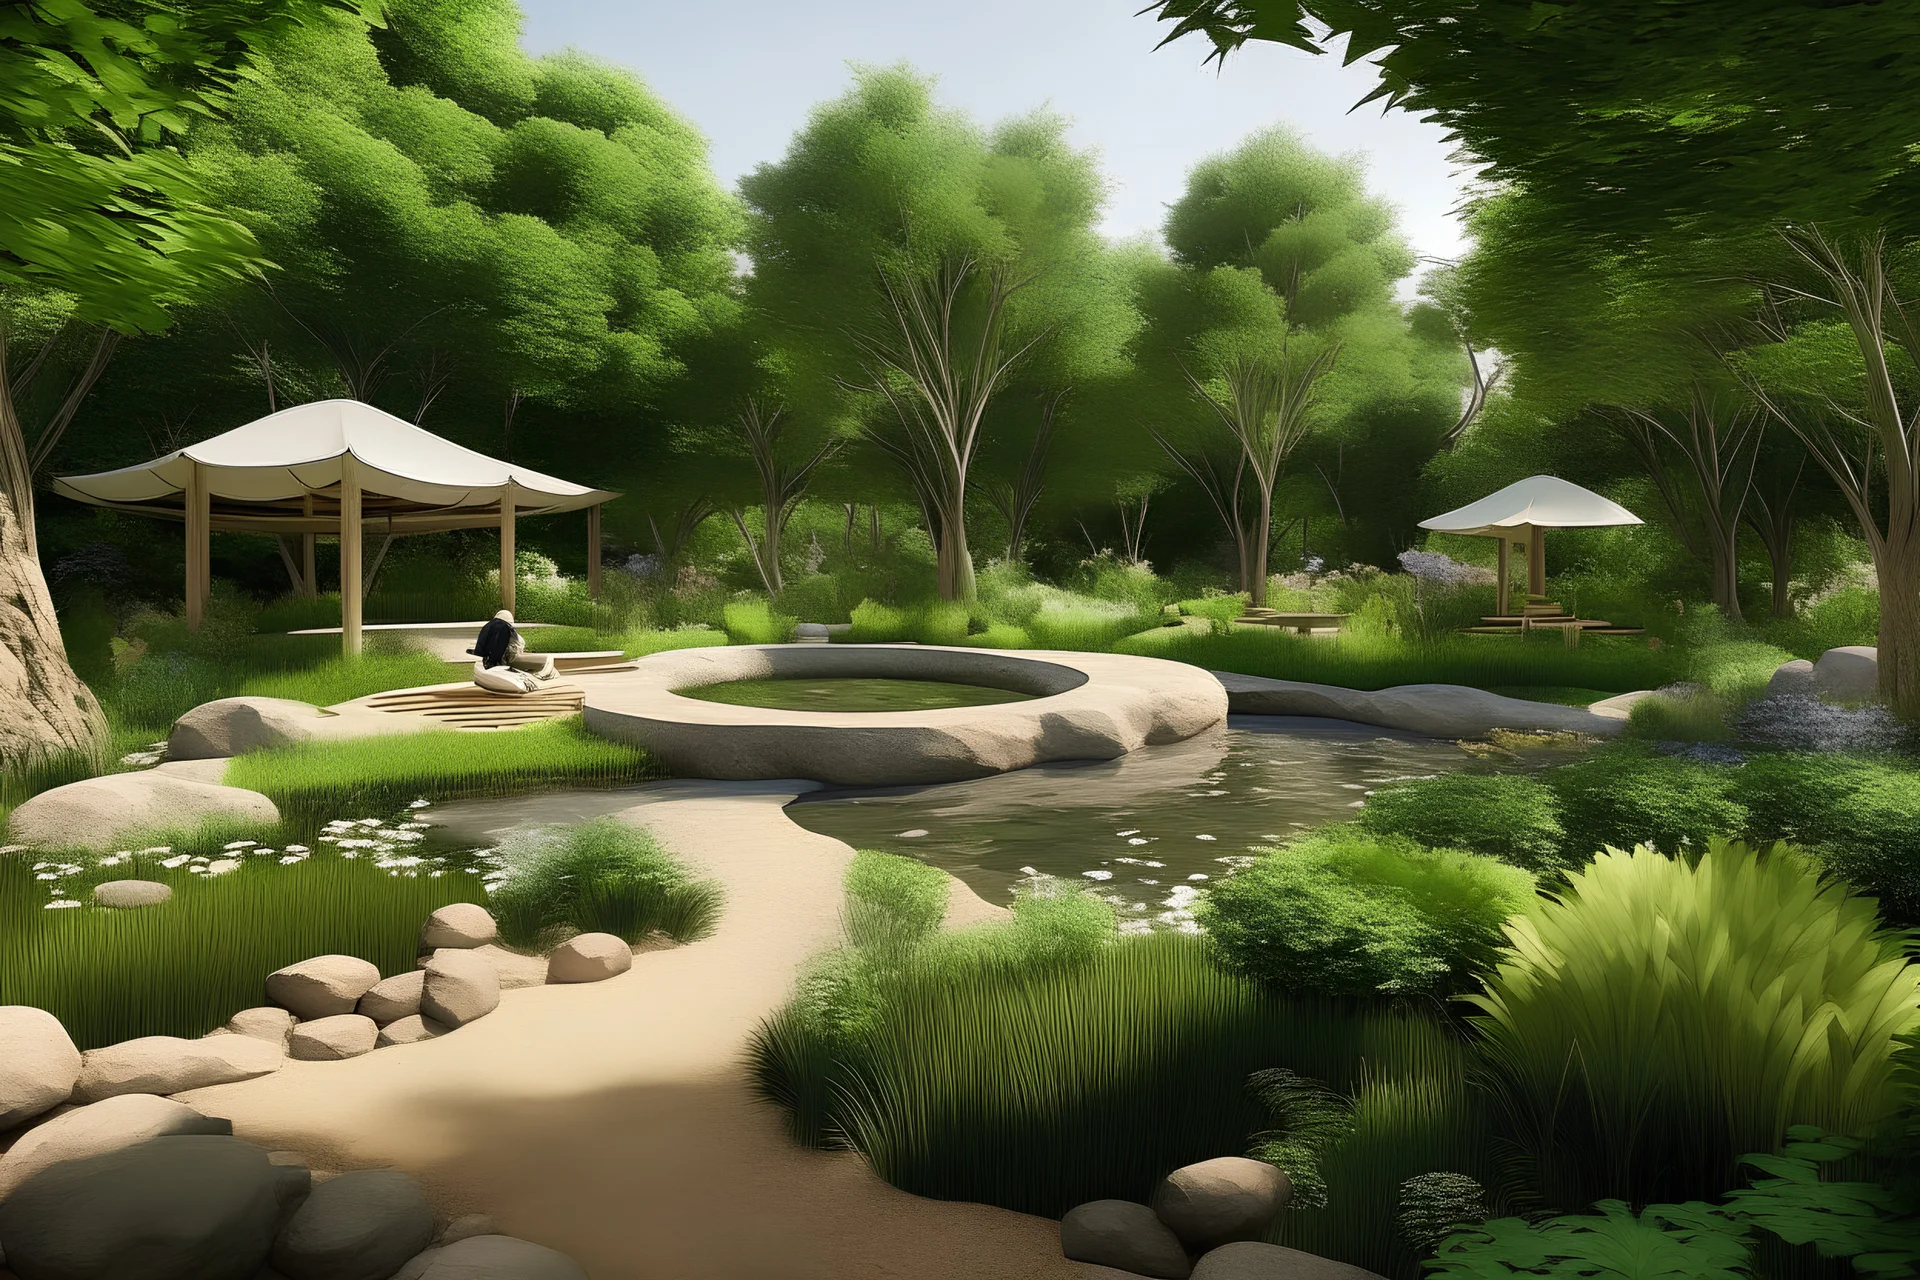 Serene Haven: Creating Your Tranquil Garden Retreat